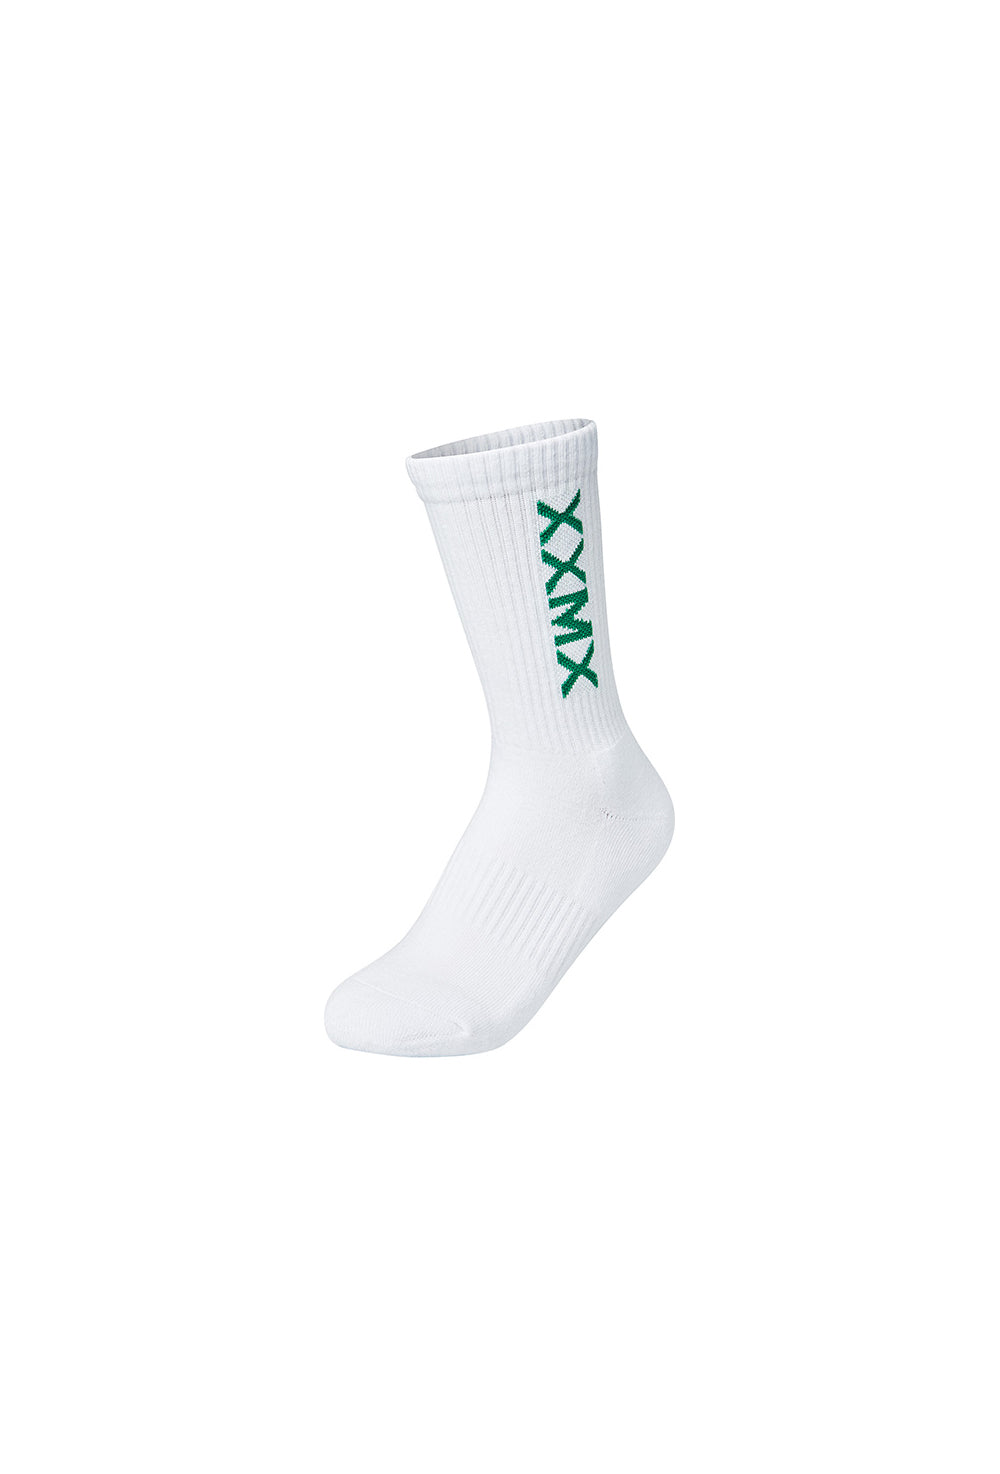 XEXYMIX Logo Crew Socks - Green